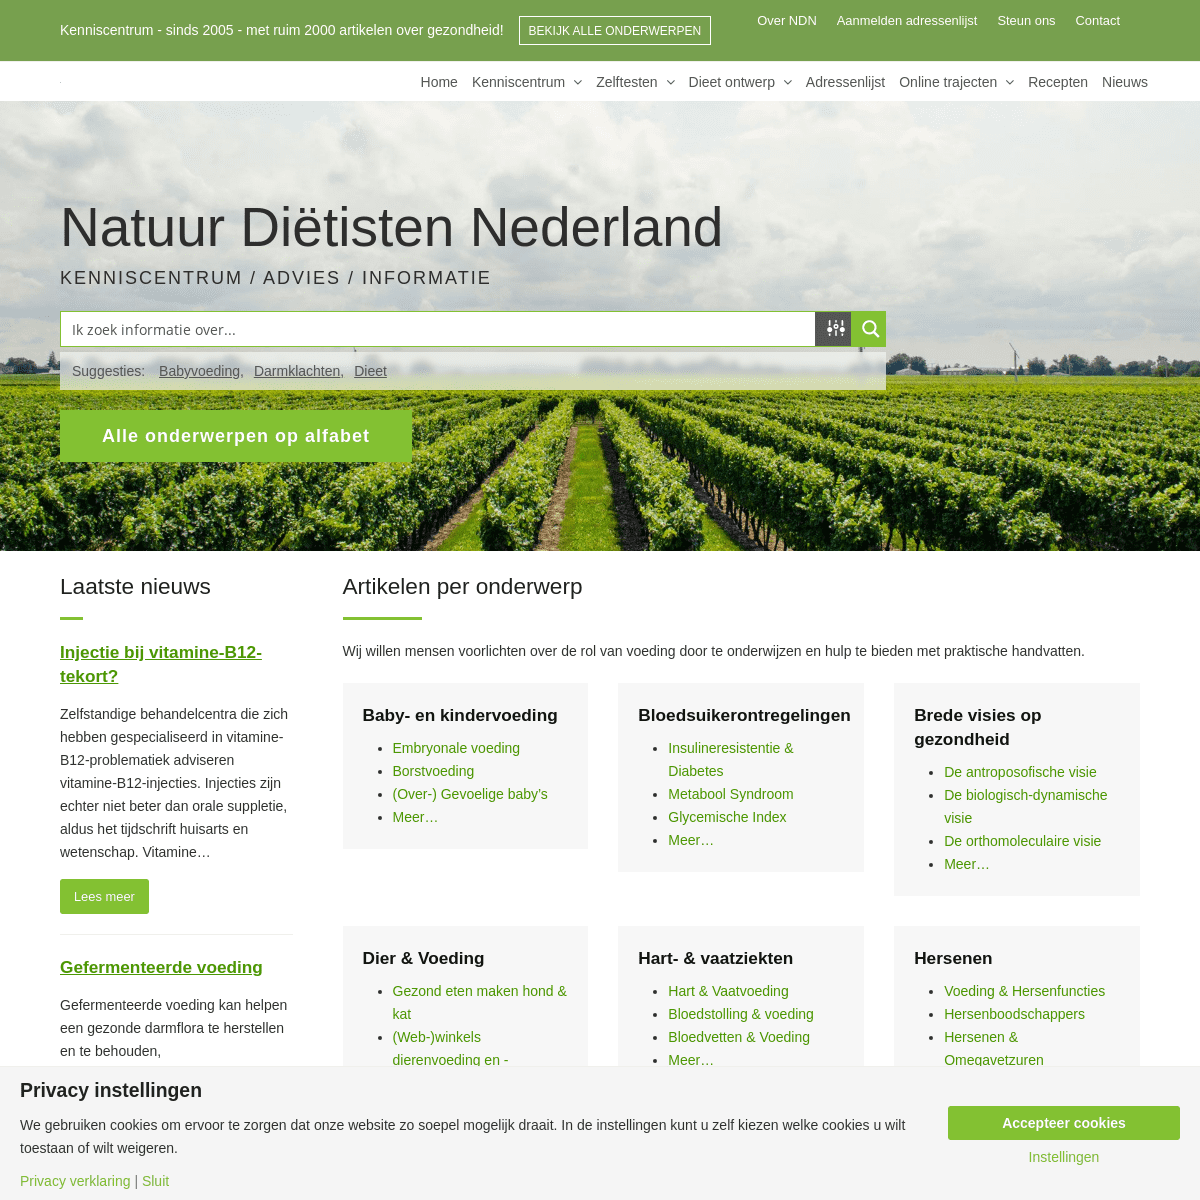 A complete backup of https://natuurdietisten.nl